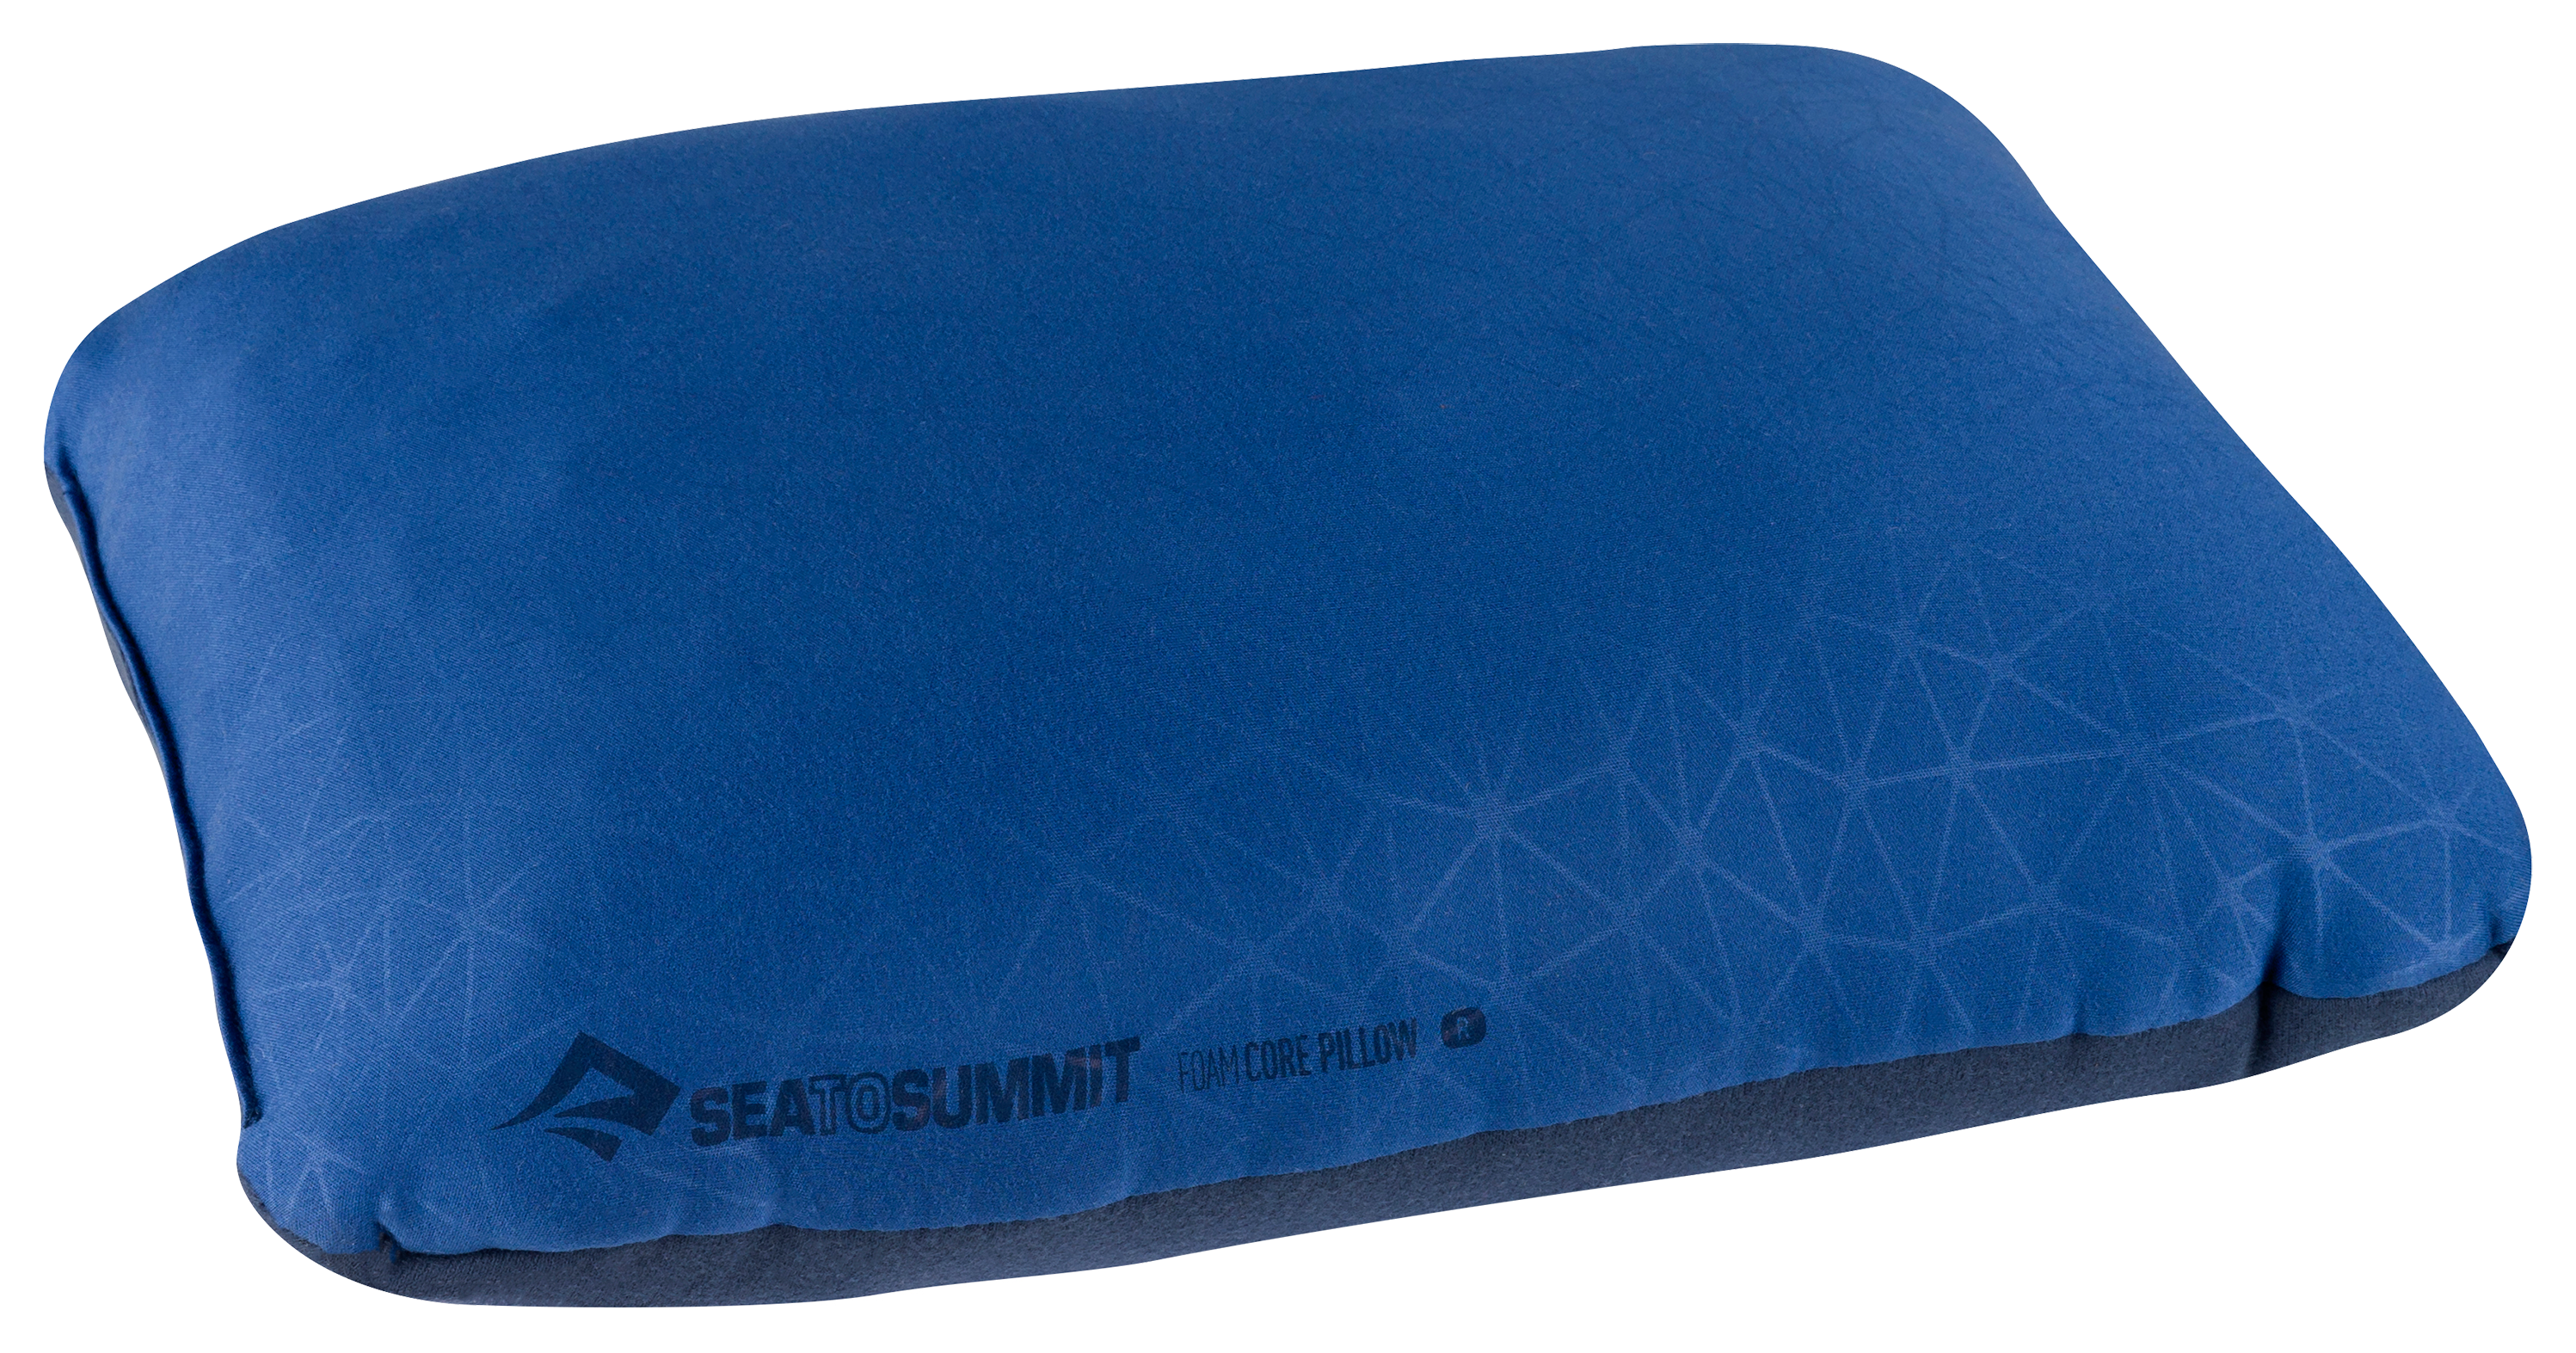 Sea to Summit Foam Core Camping Pillow